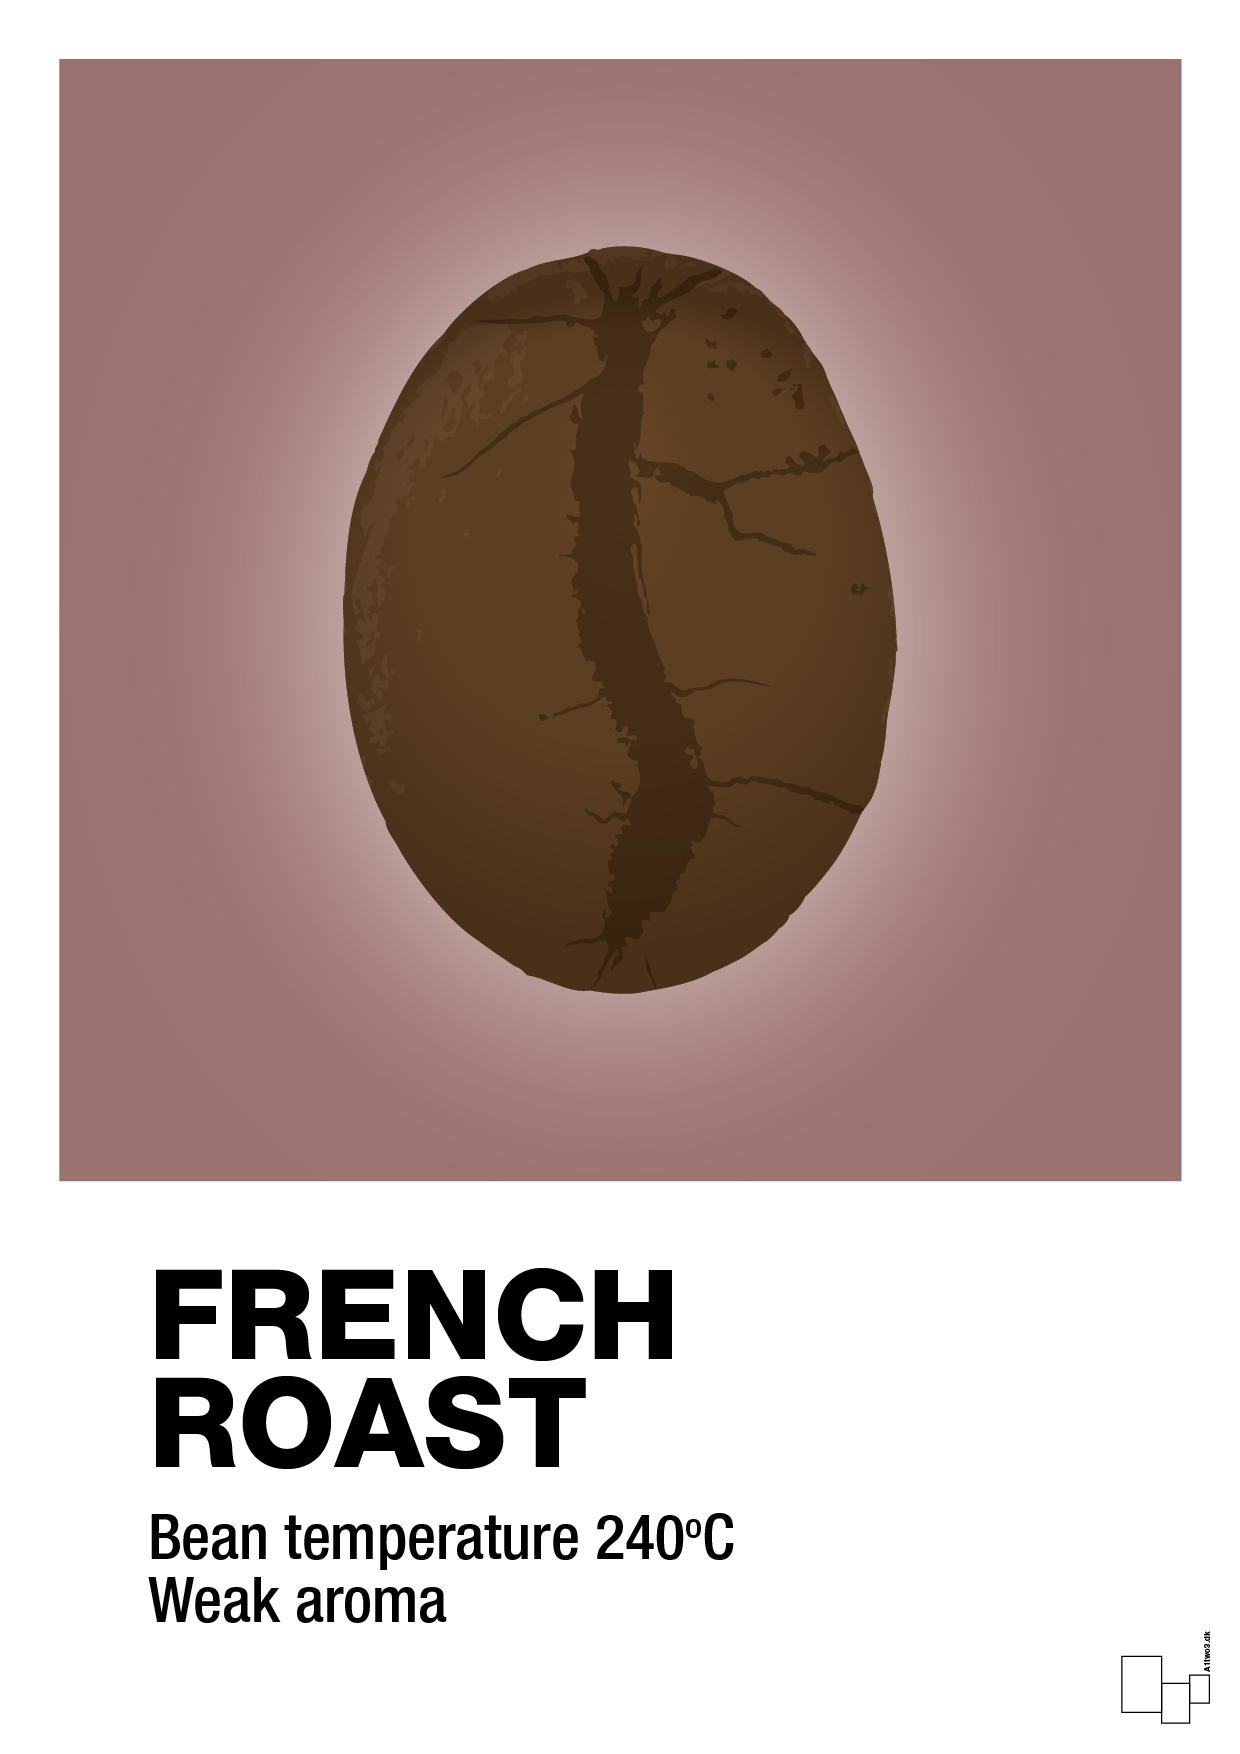 french roast - Plakat med Mad & Drikke i Plum